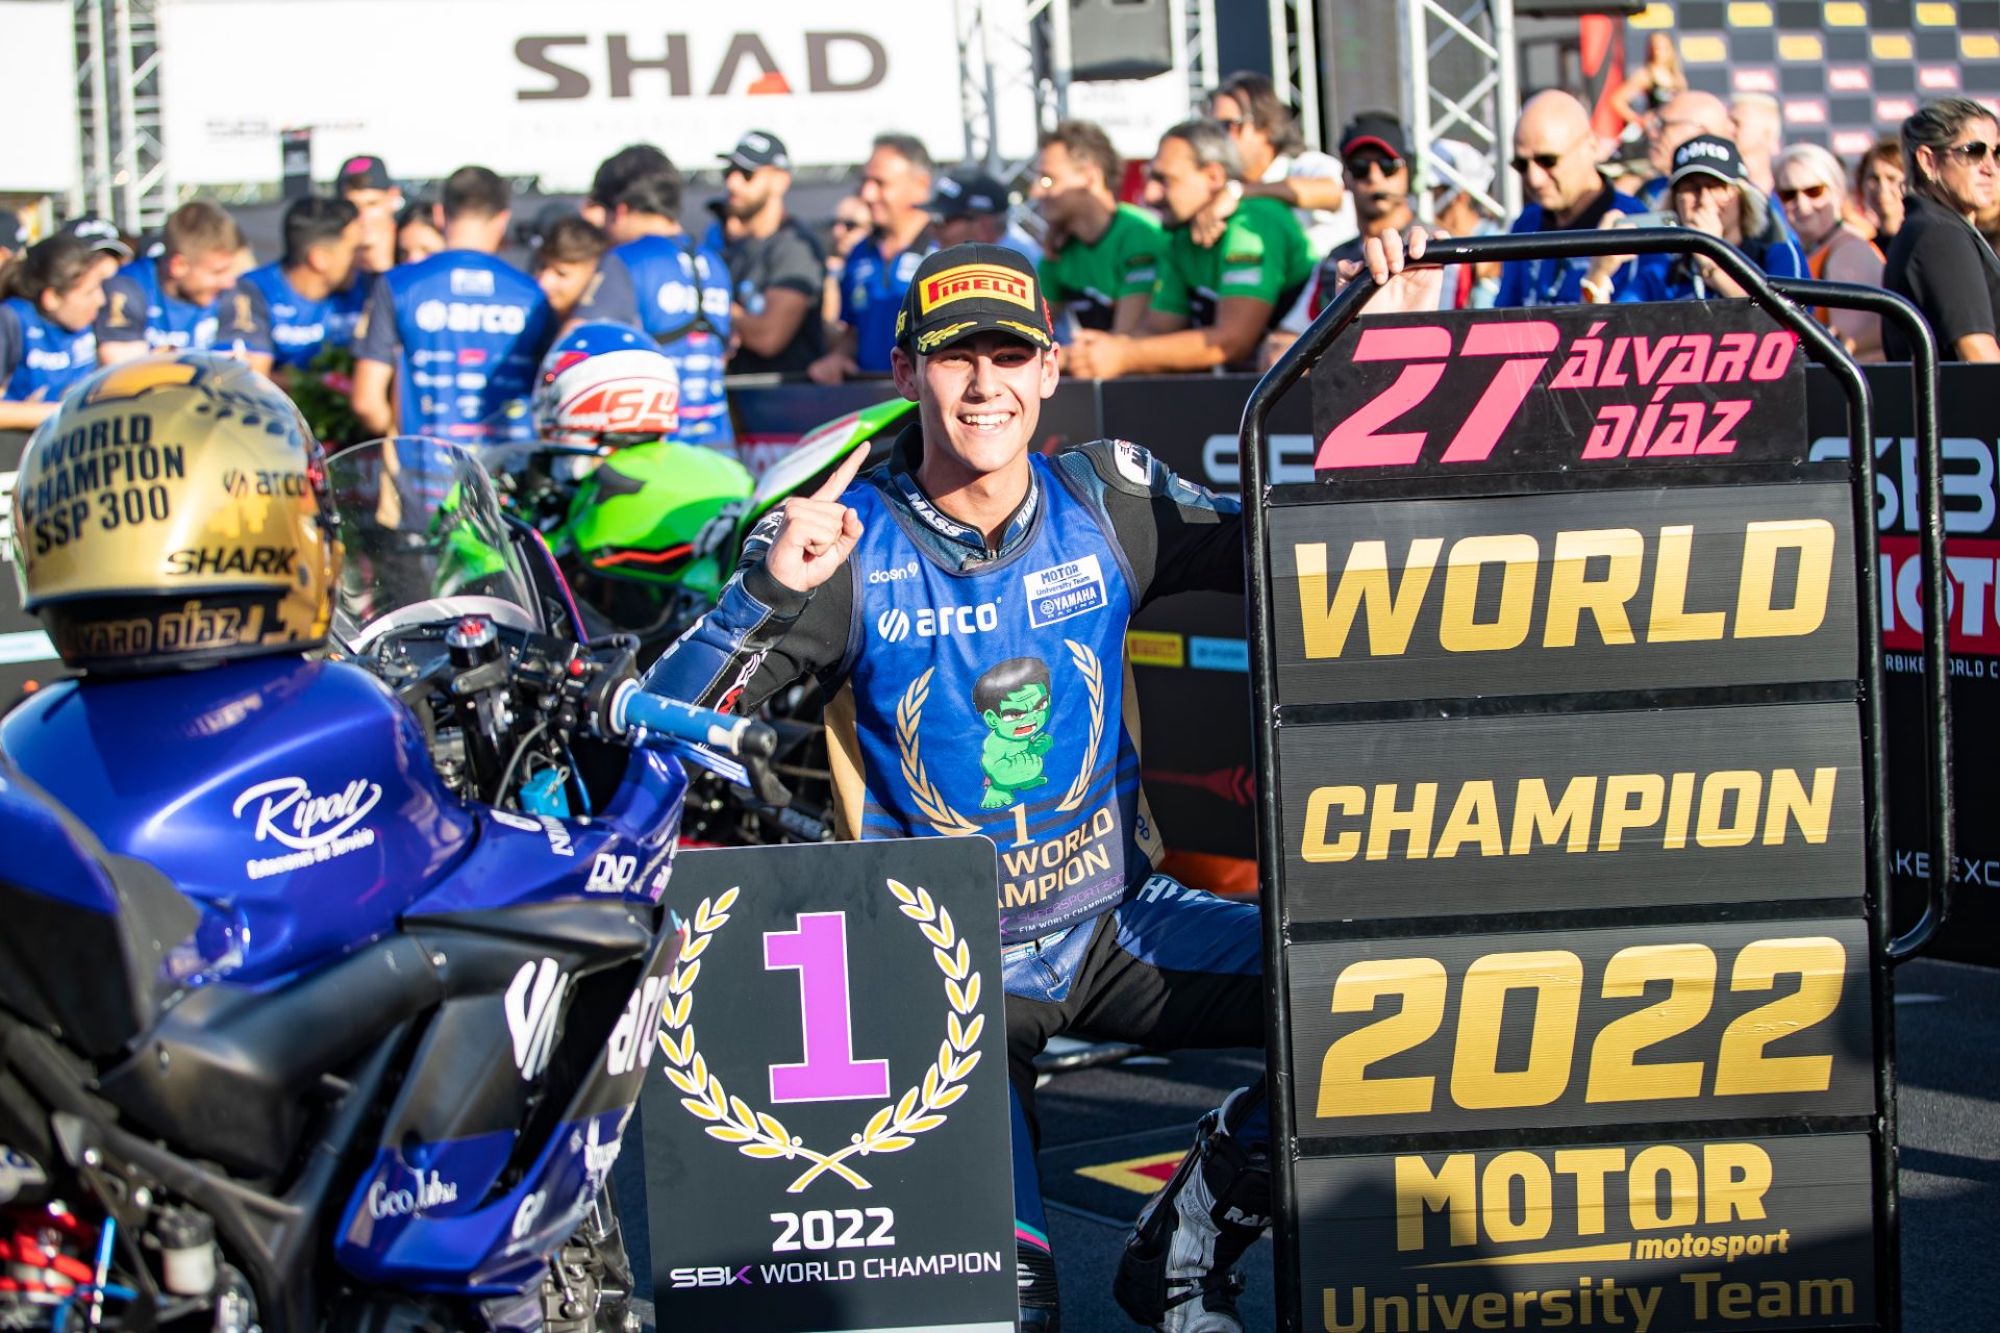 Alvaro Diaz, a Yamaha racer and bLU cRU graduate, after winning the 2022 FIM Supersport 300 World Championship. Media sourced from Yamaha Racing.